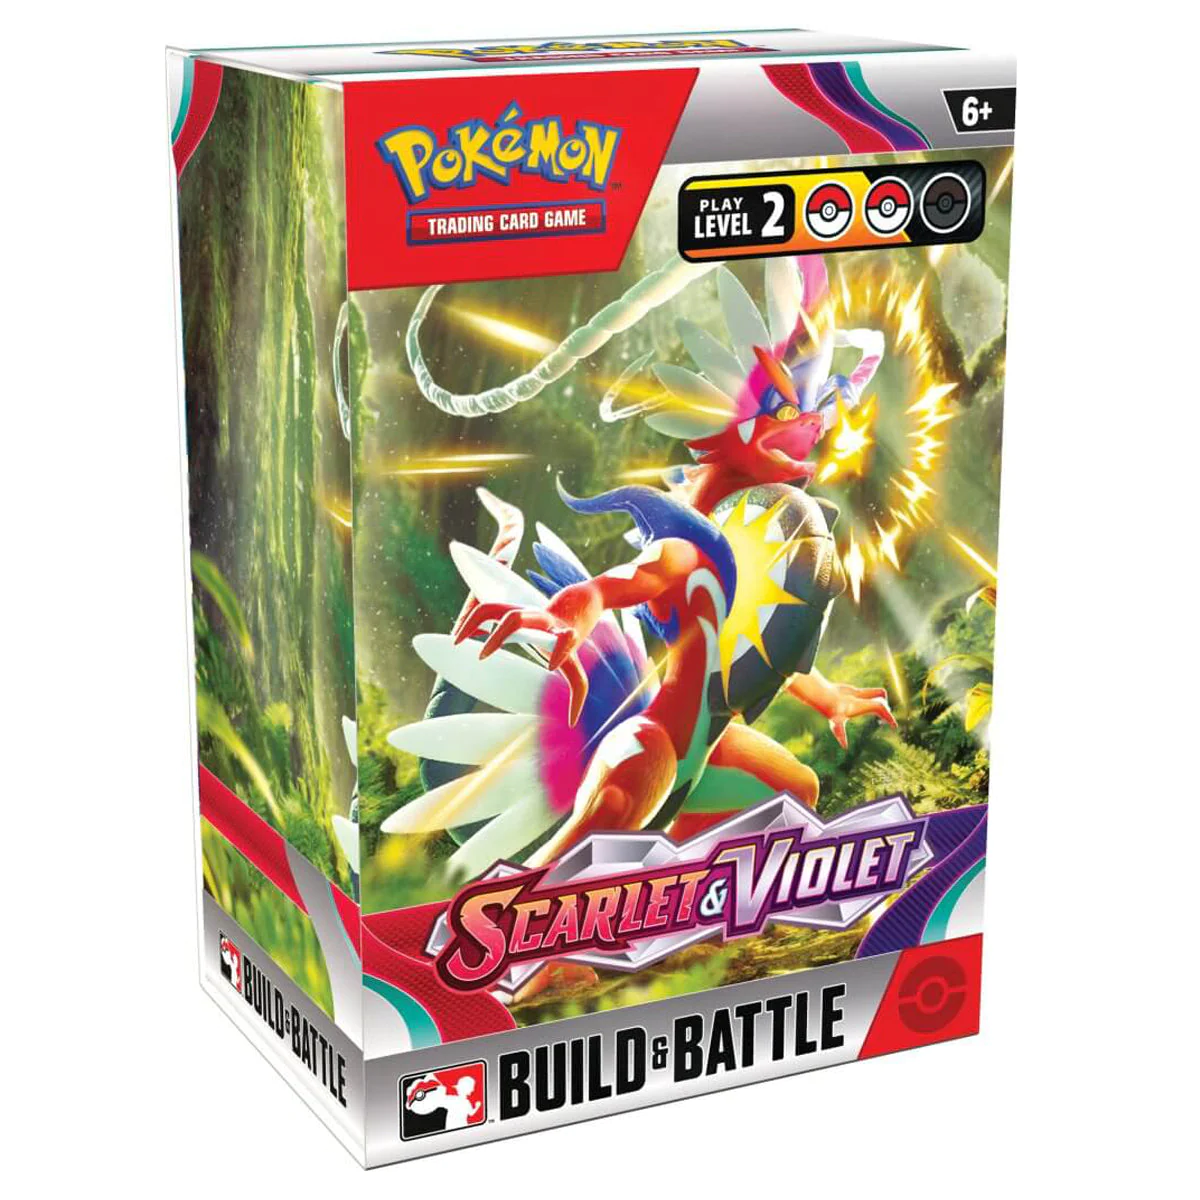 Scarlet & Violet 1 Build & Battle Box Pokemon TCG